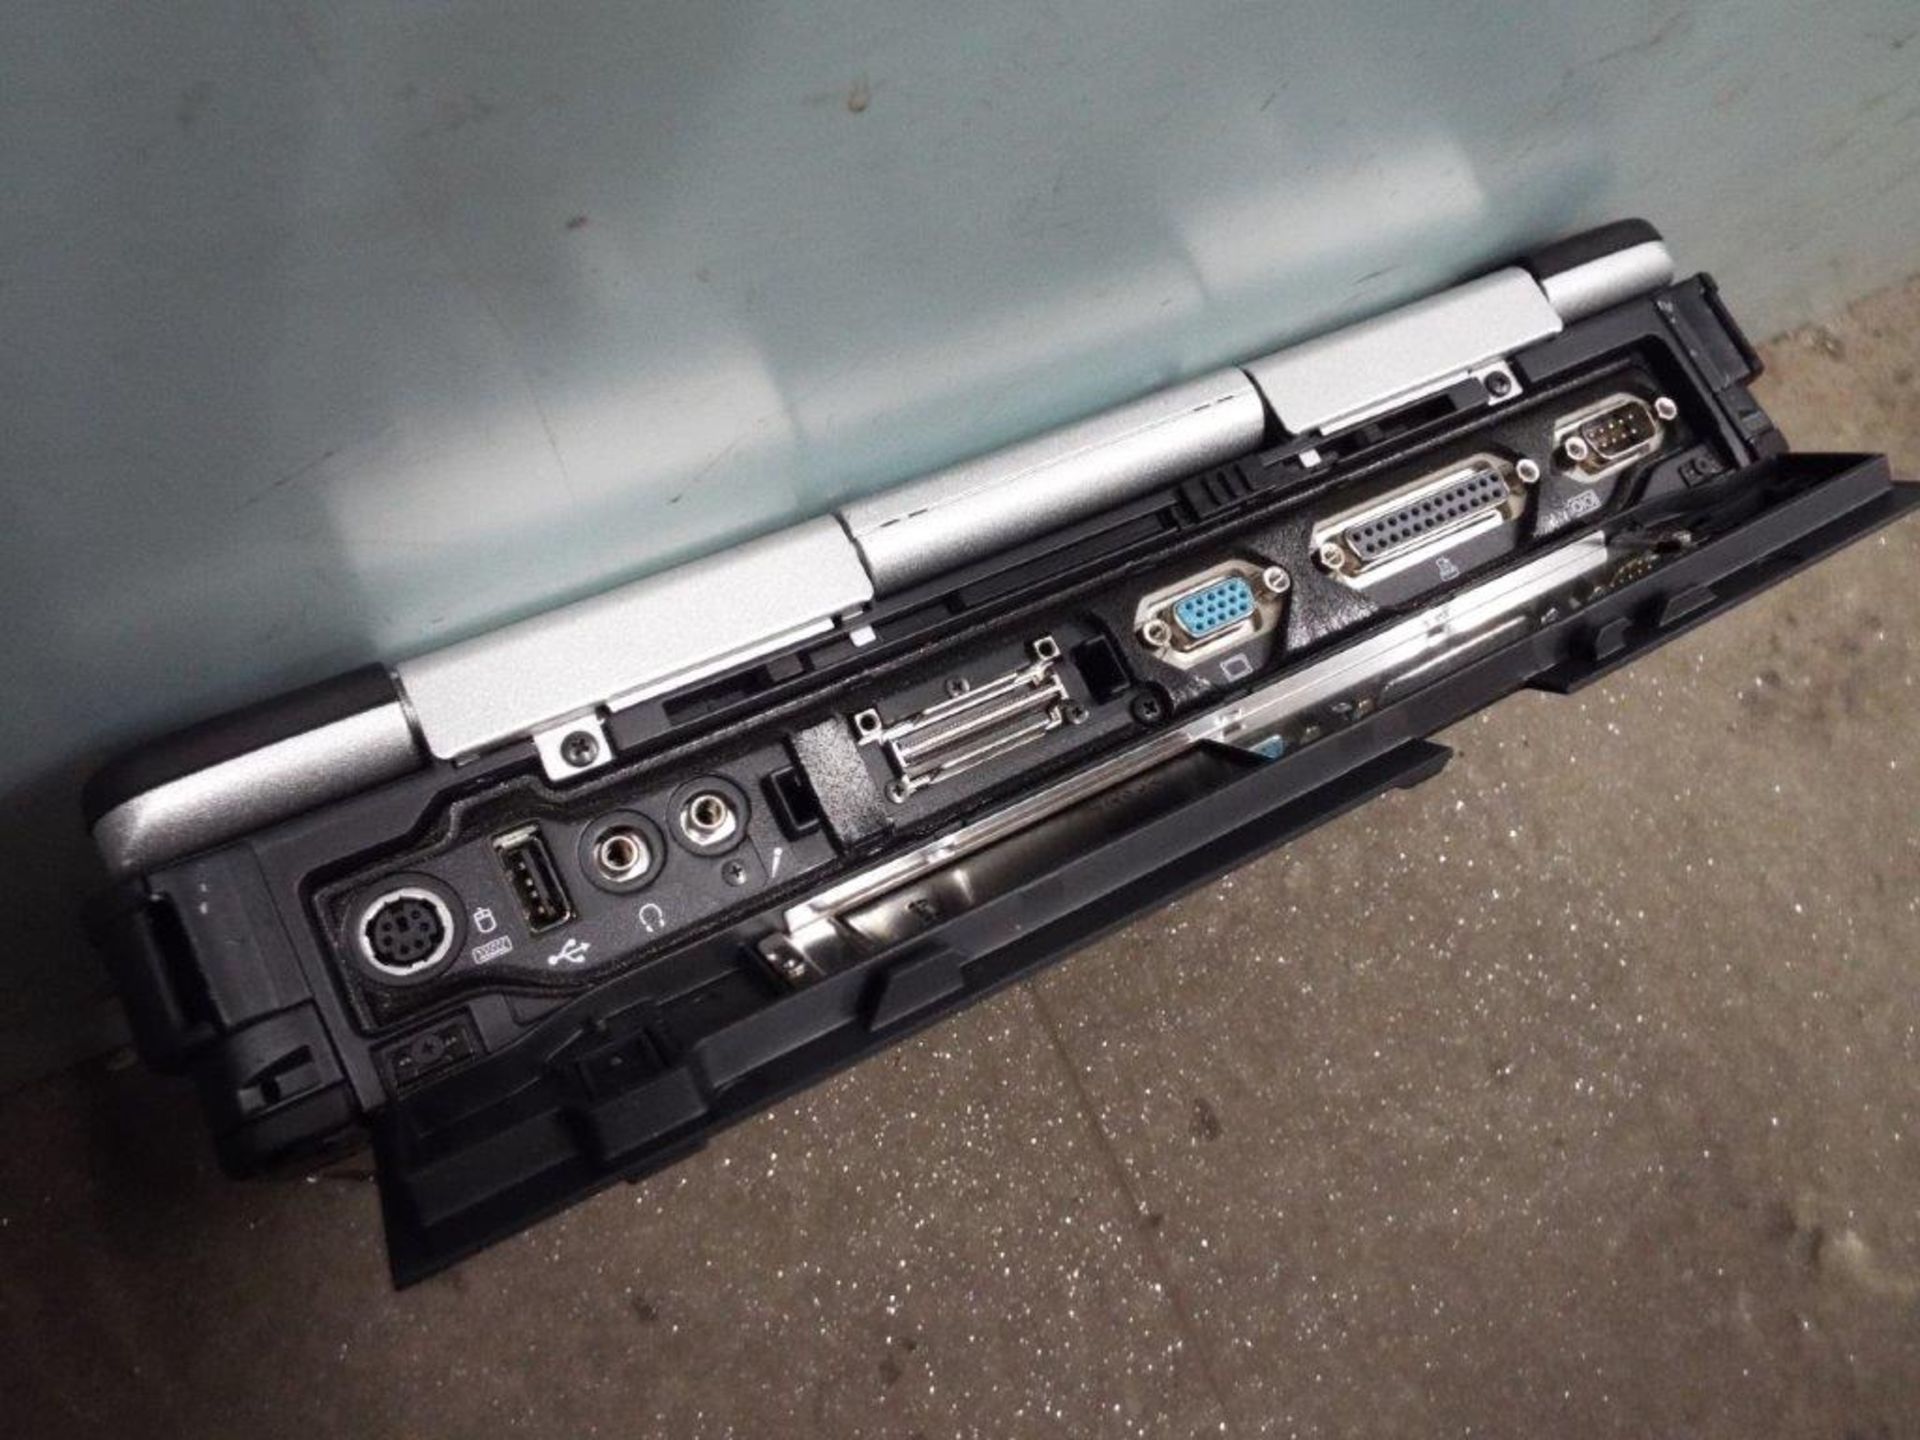 Panasonic CF-28 Toughbook Laptop - Image 7 of 12